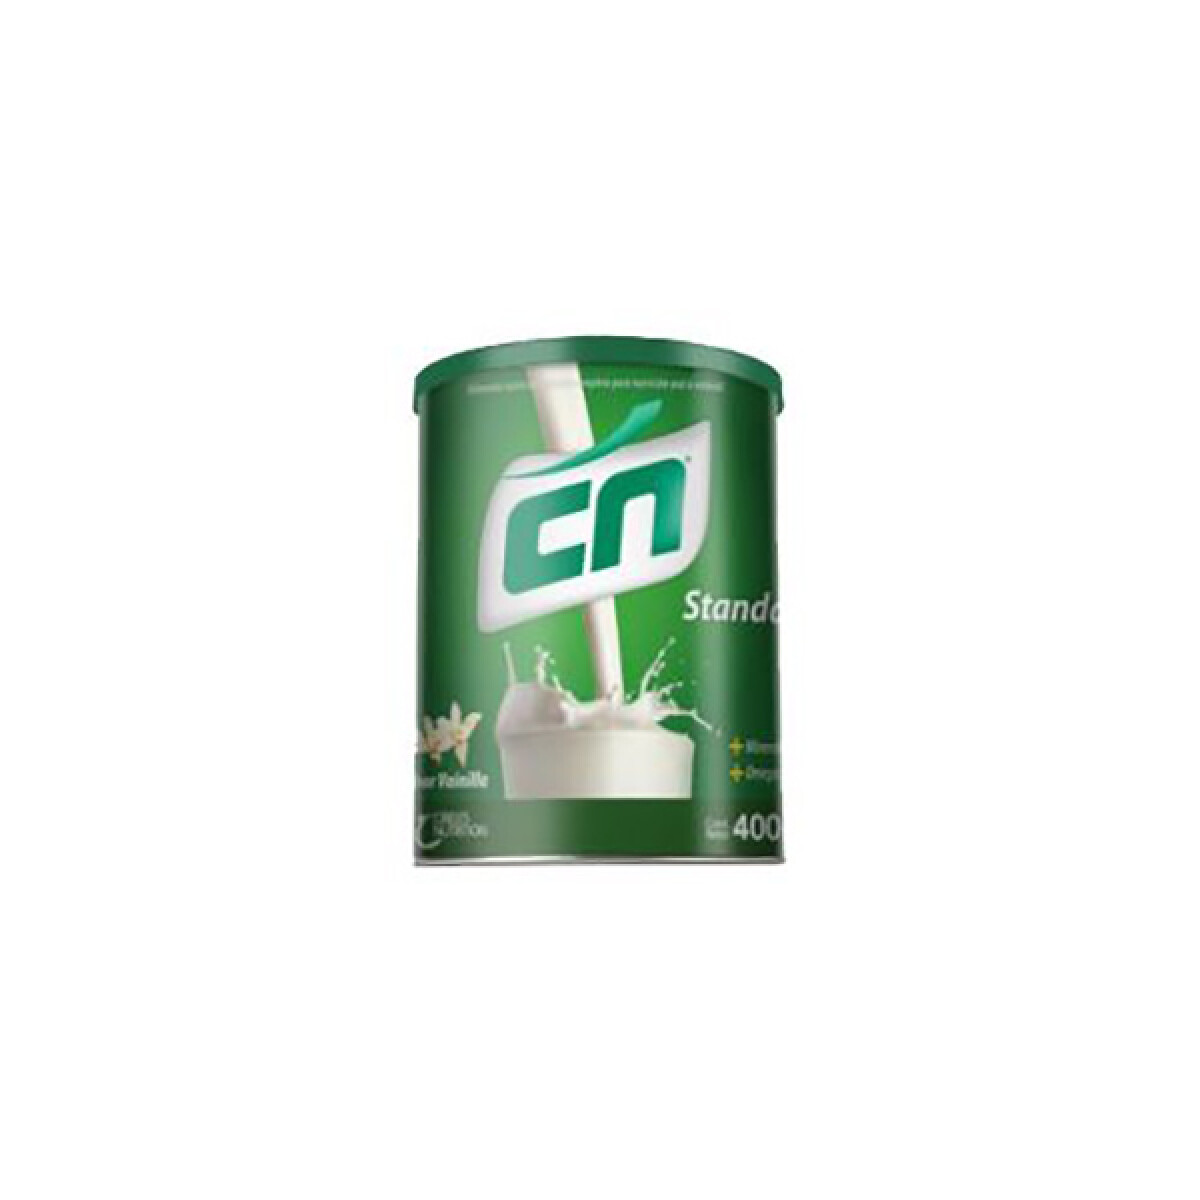 Cn complemento - Standard 400 g 